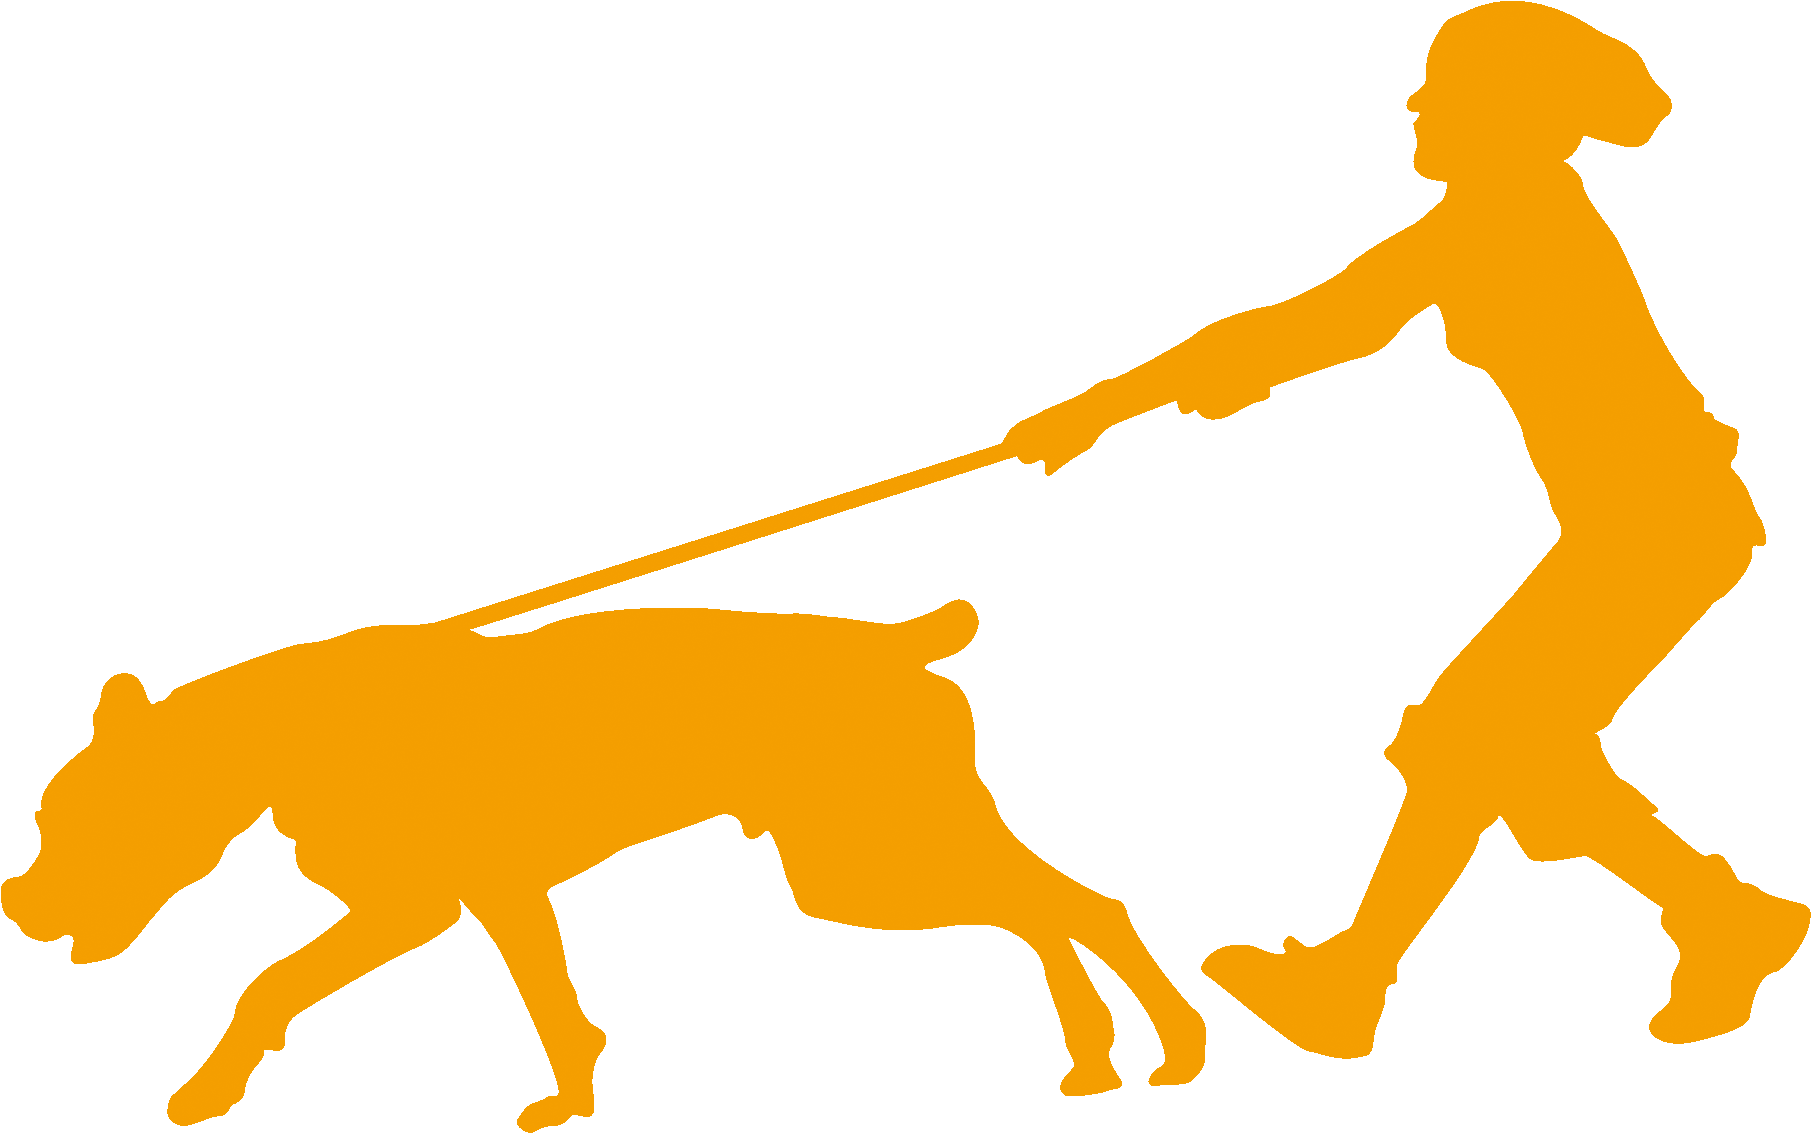 Walk Club Uitsig Animal Rescue Centre - Dog Walking (1904x1310)